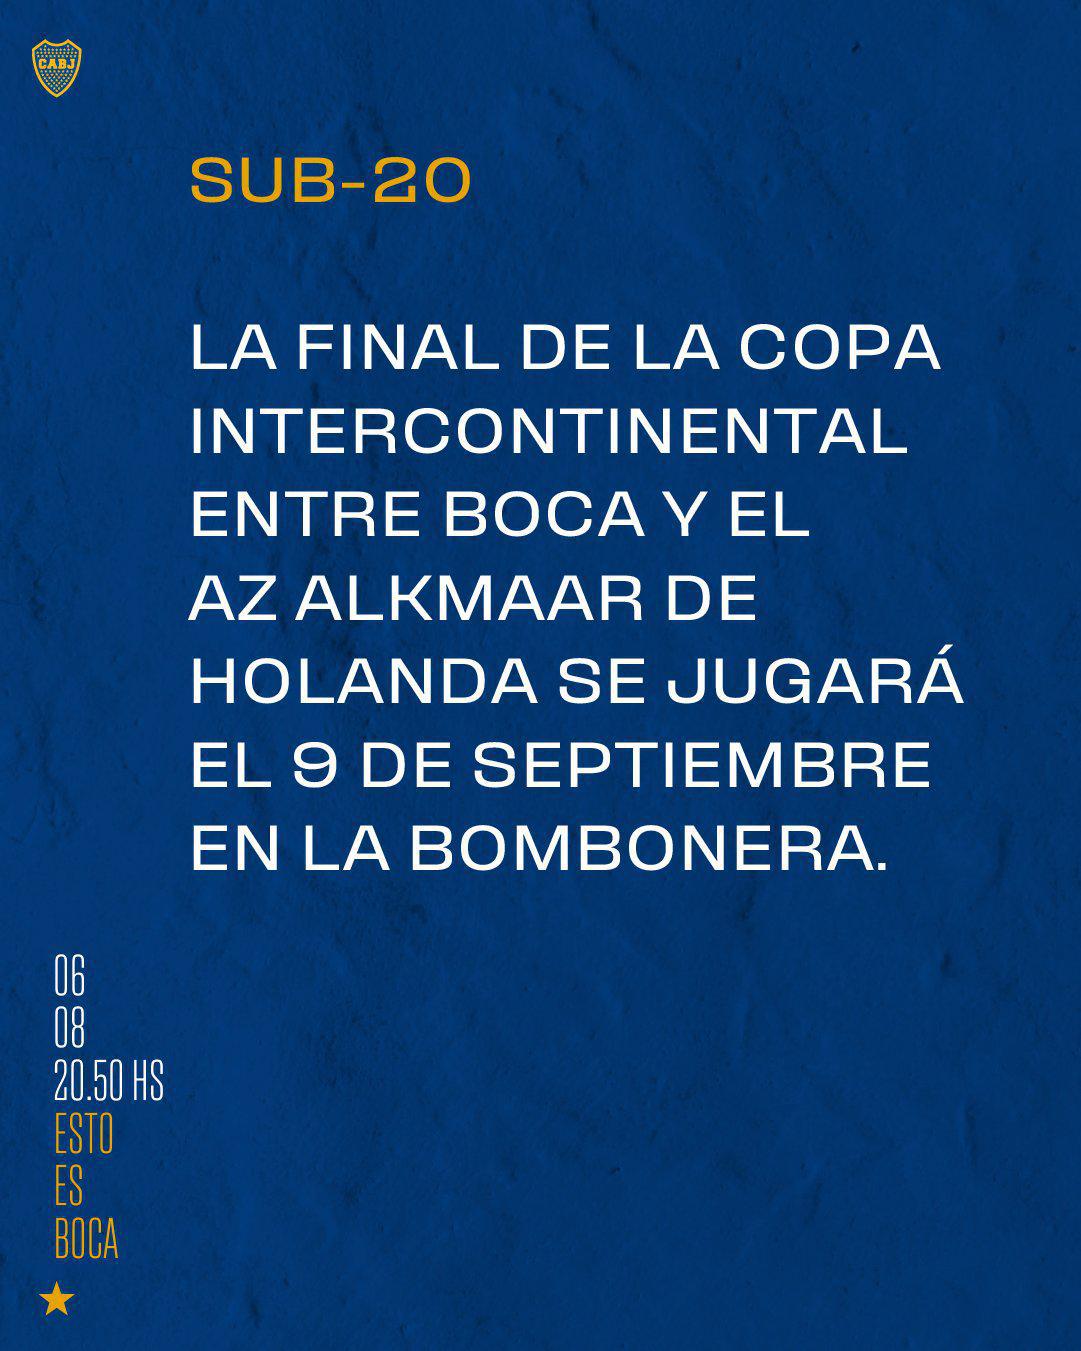 Copa Intercontinental Sub-20